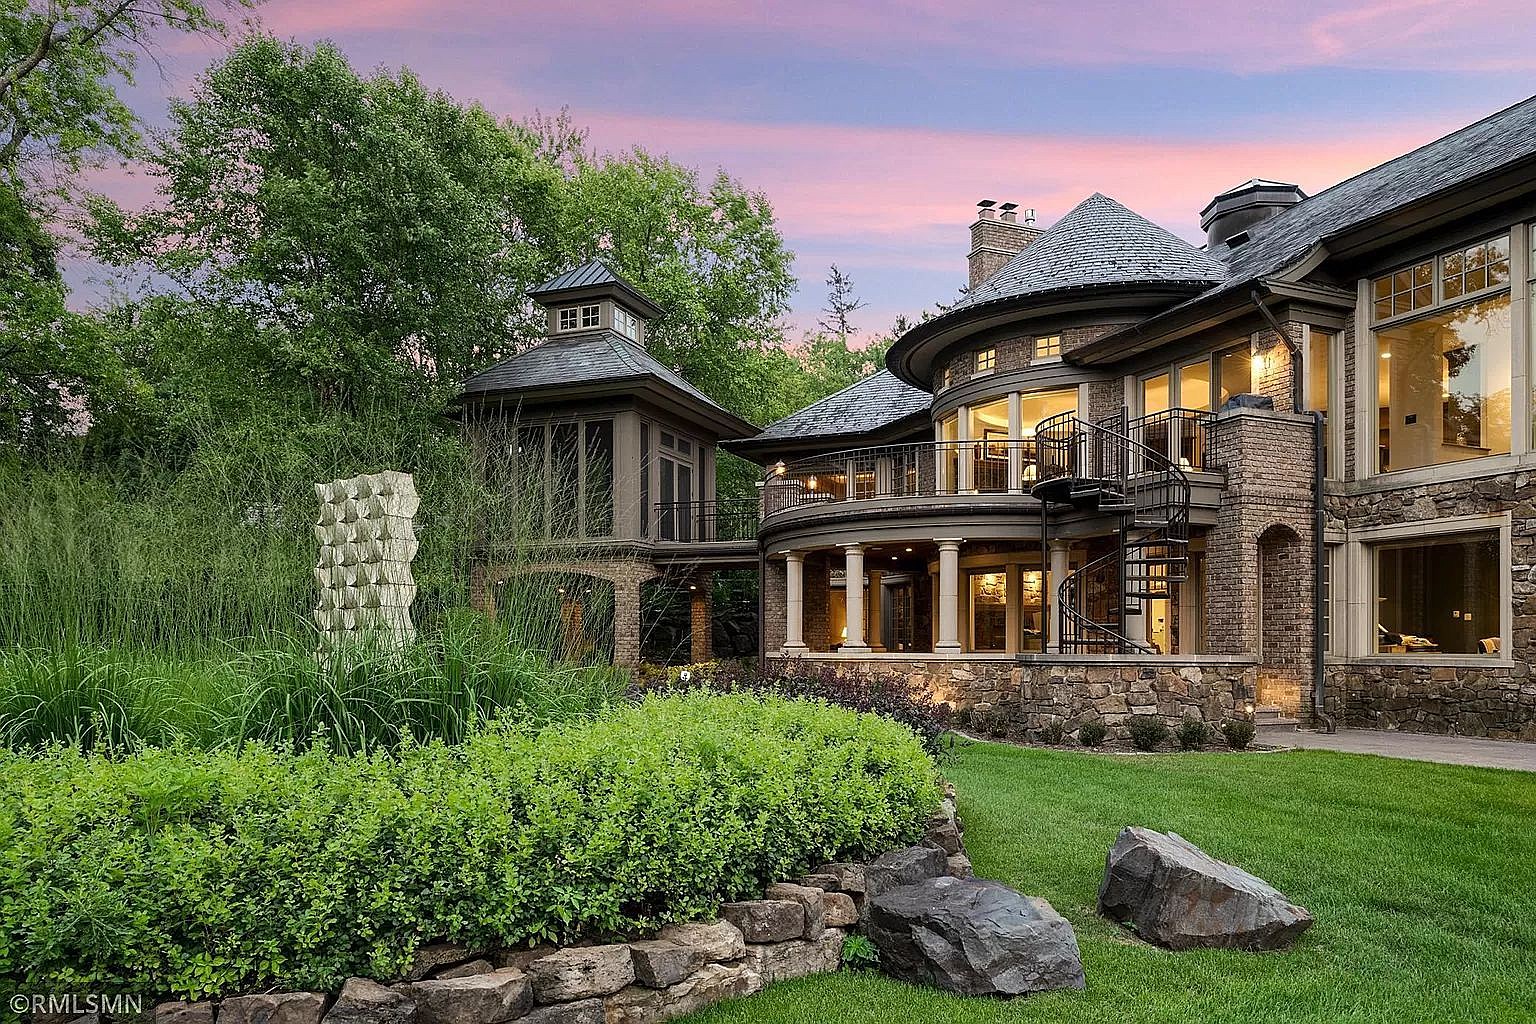 Jeff Bezos' Aunt is Selling $6.9 Million Minnesota Lakefront Home